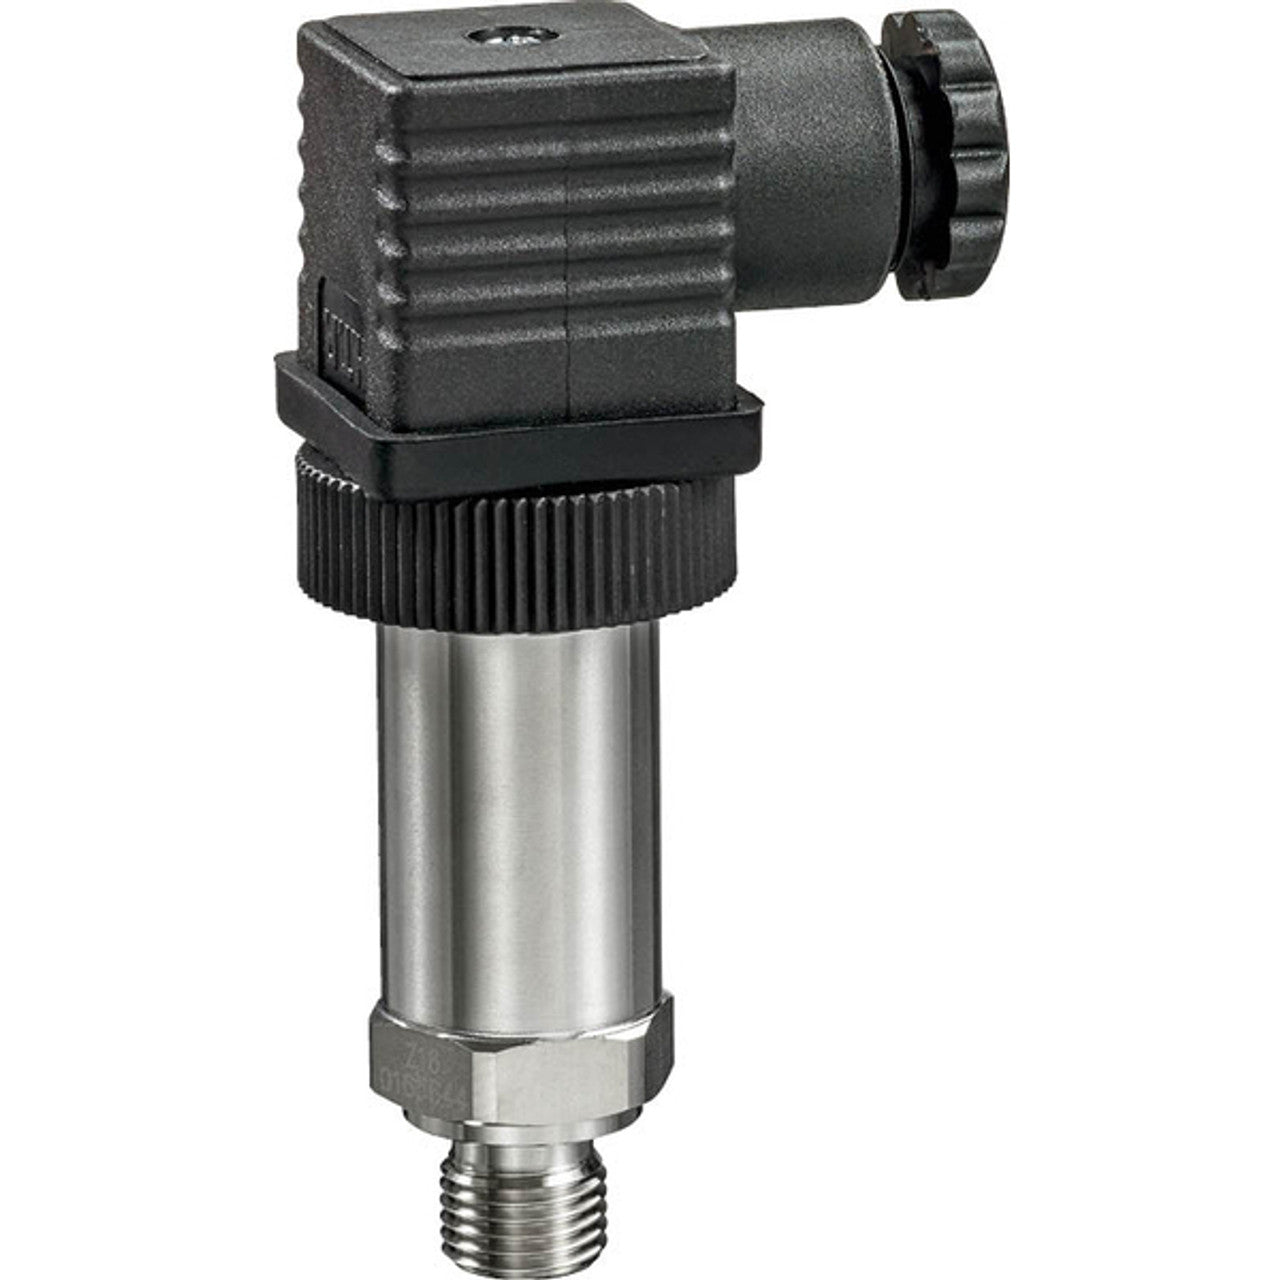 Belimo Water Pressure Sensor 0-10bar 4-20mA 22WP-136 HVAC Controls